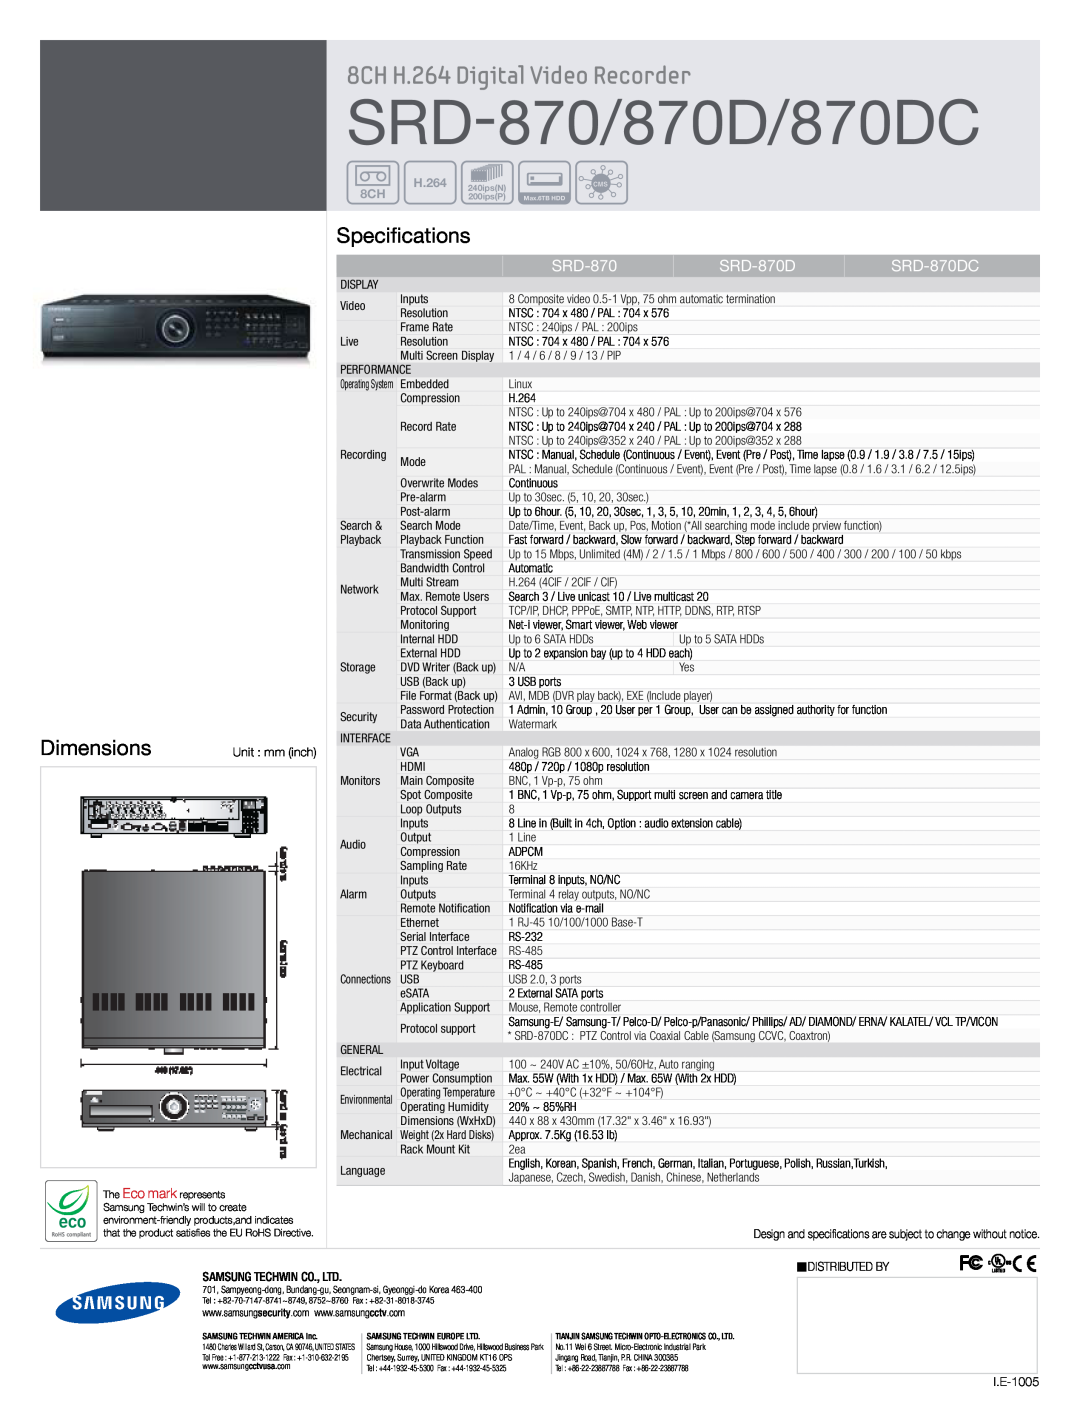 Samsung manual SRD-870/870D/870DC, 8CH H.264 Digital Video Recorder, Dimensions, Specifications, SRD-870DC 